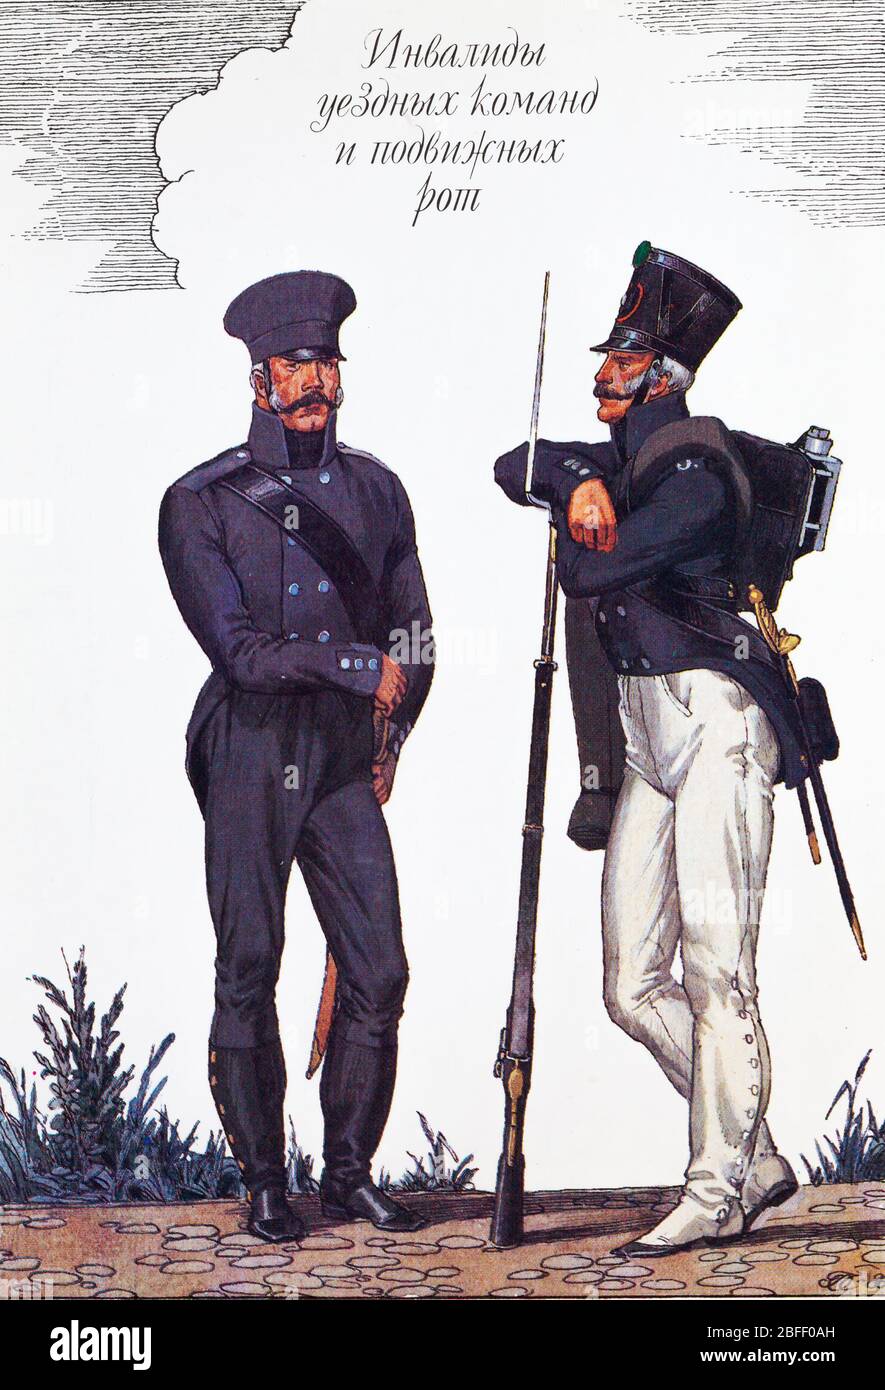 Veterans, 1812, 19th century Russian army uniform, Russia Stock Photo